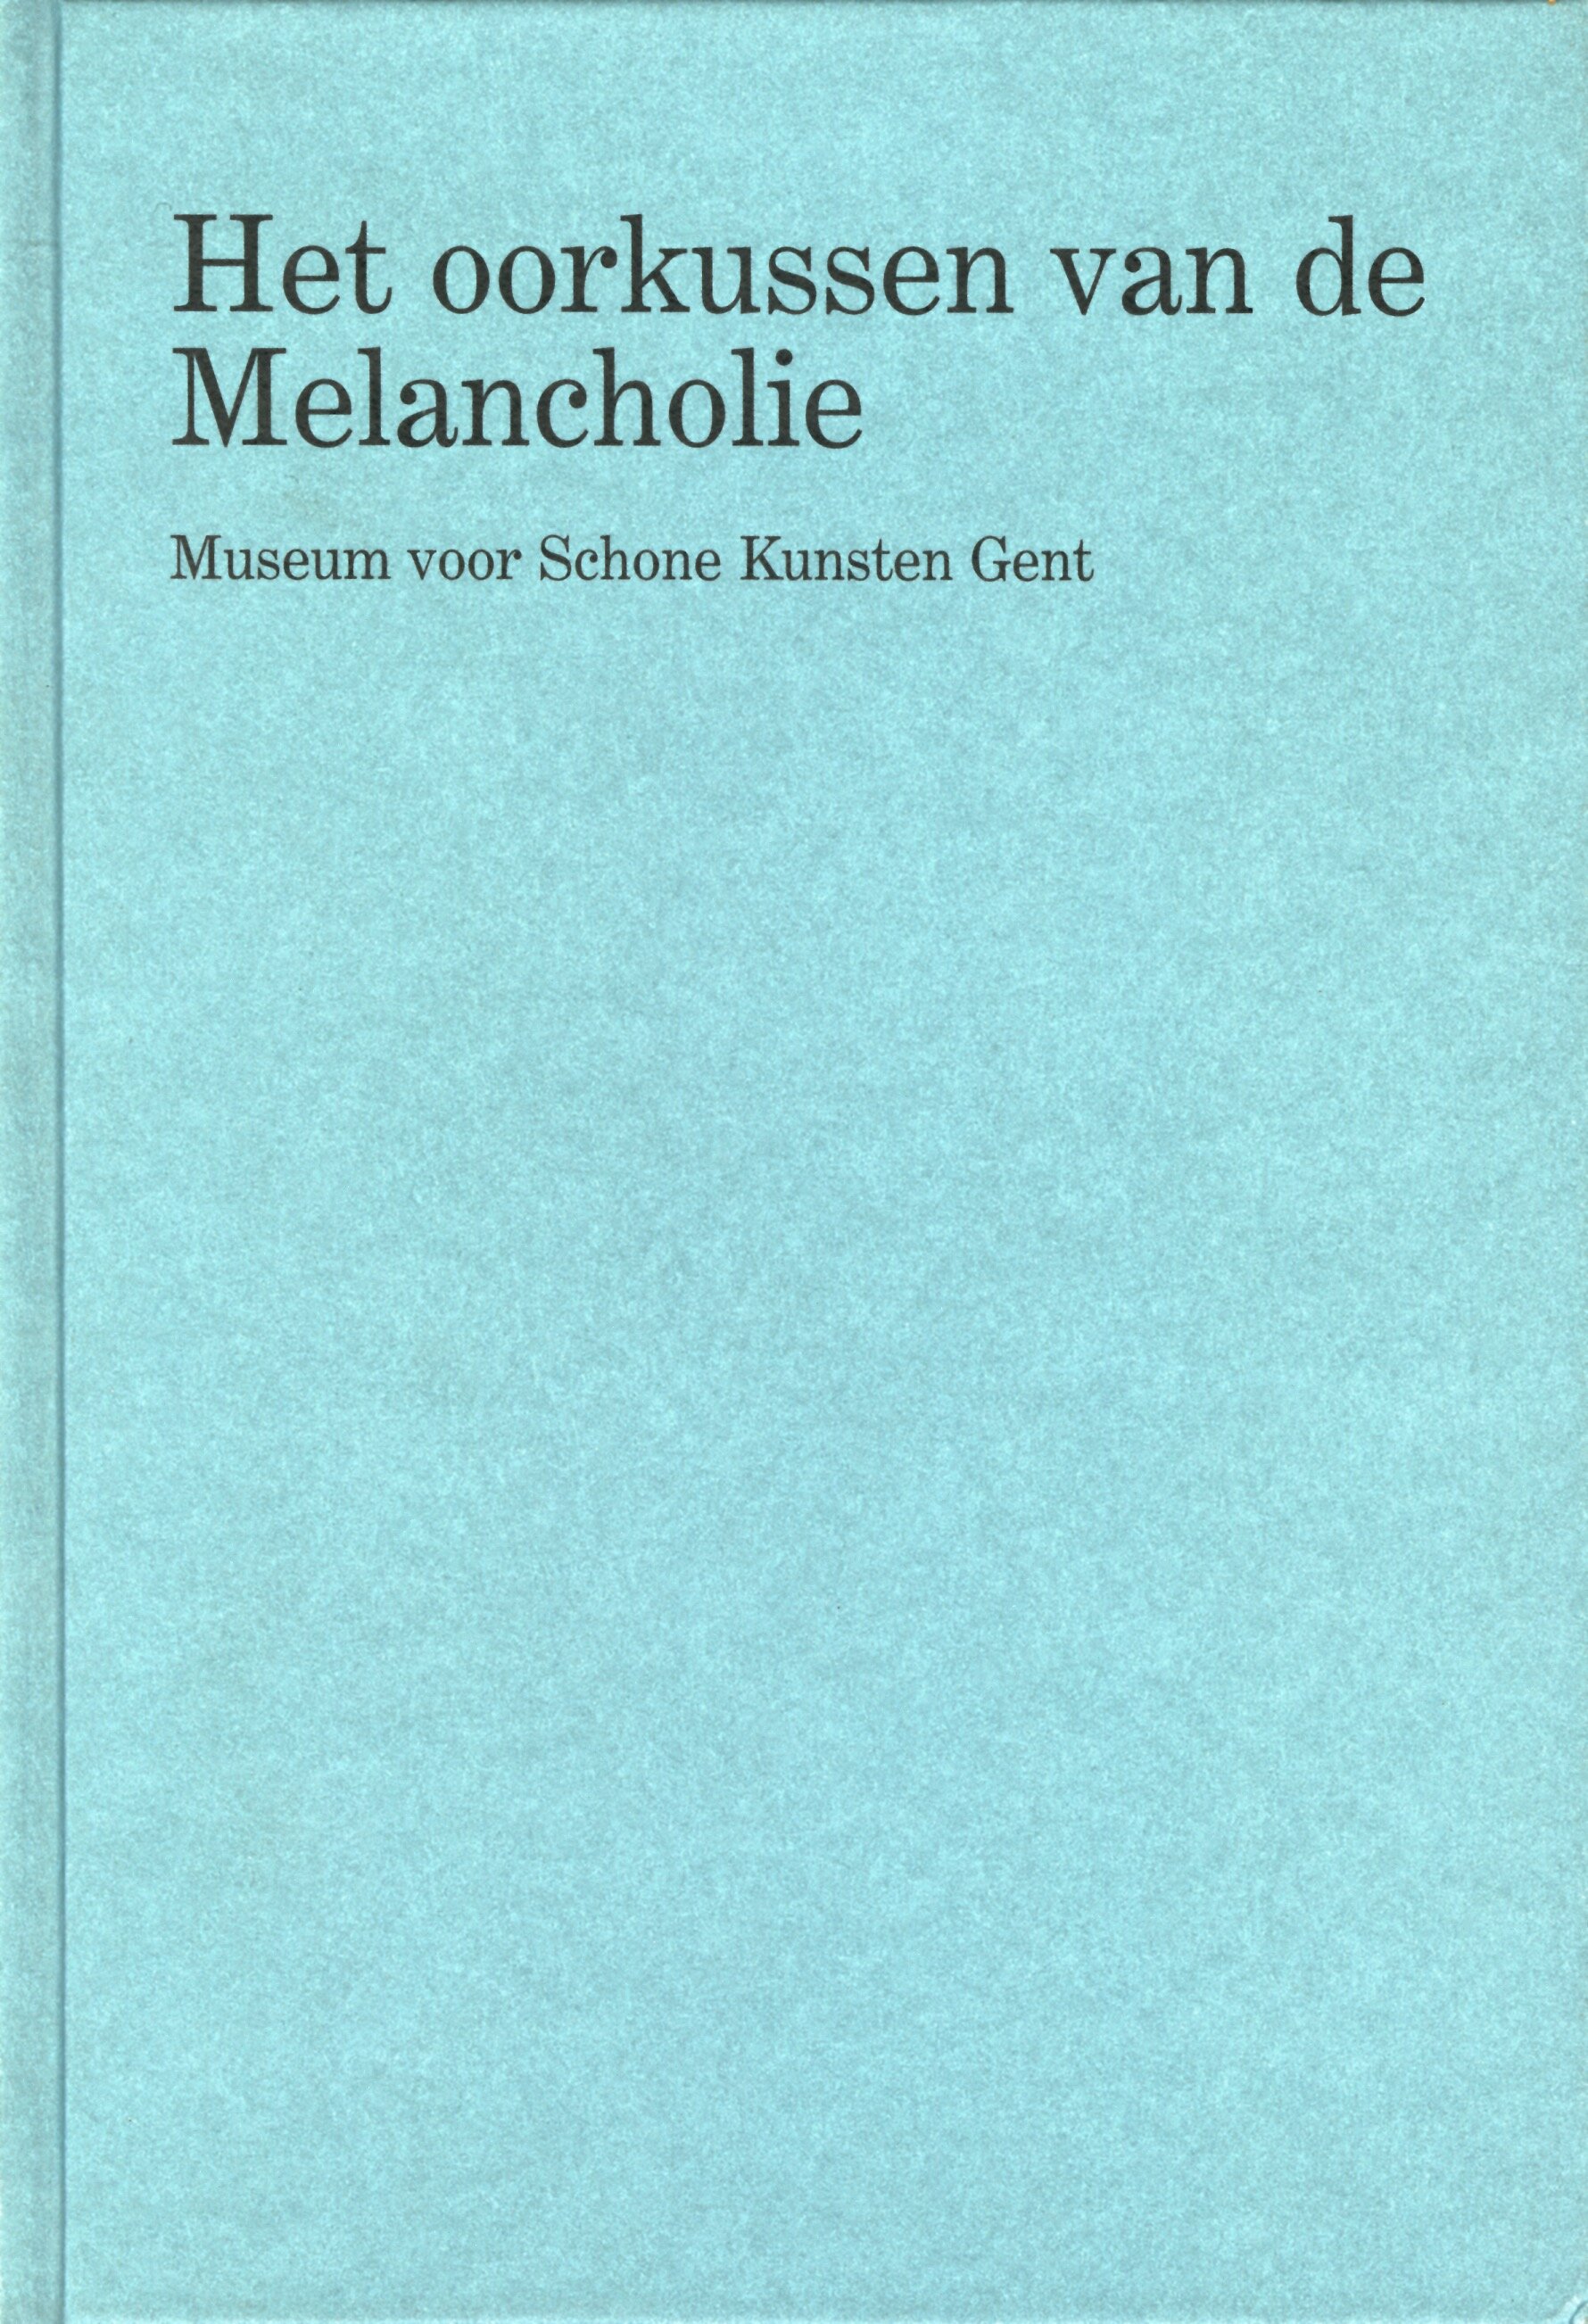 Het oorkussen van de Melancholie. By Joannes Késenne